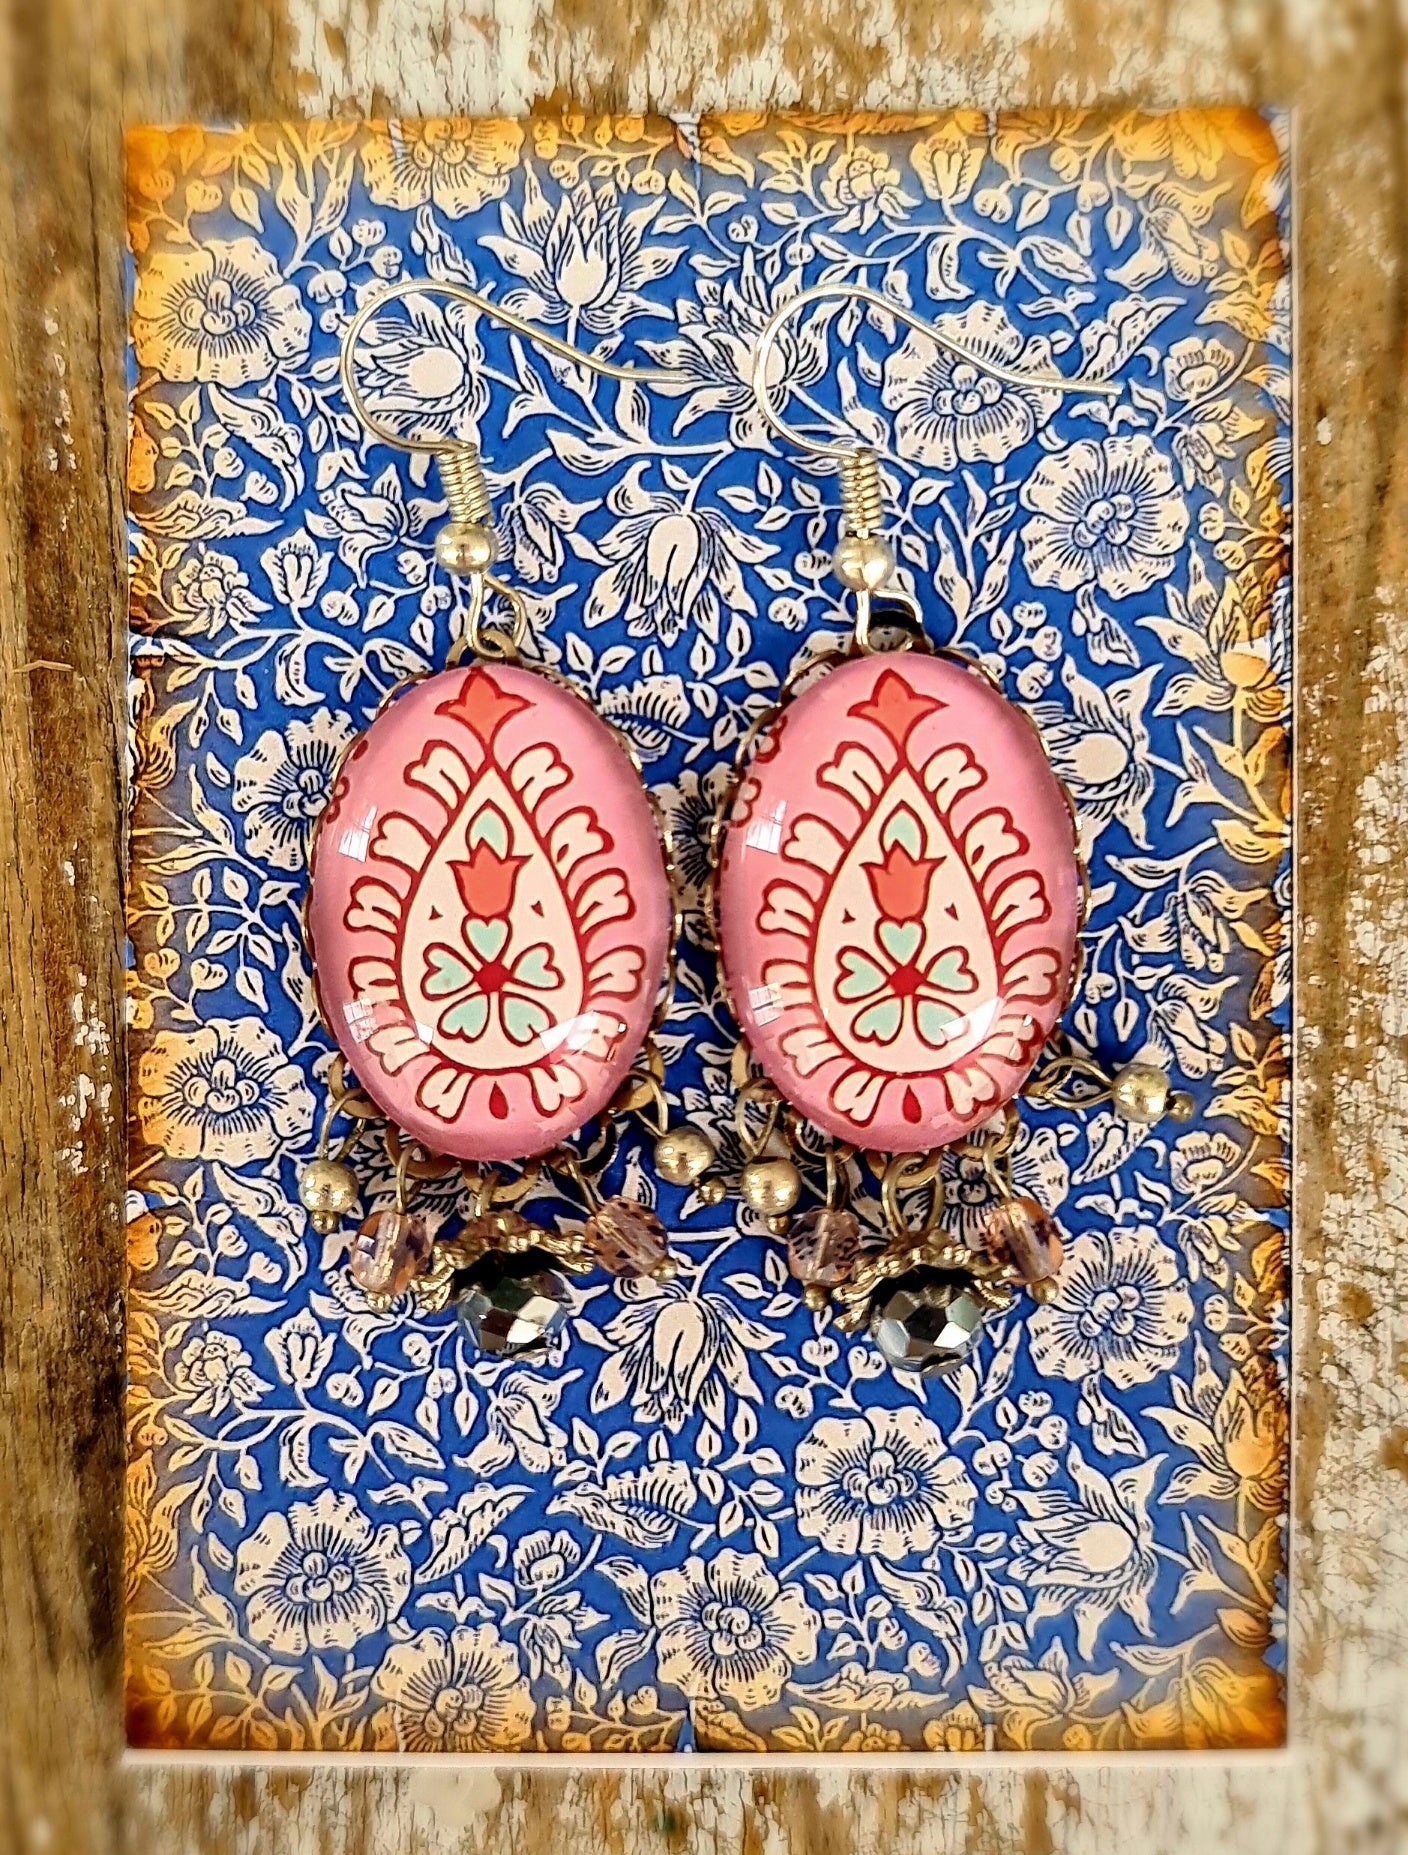 Large oval metal earrings